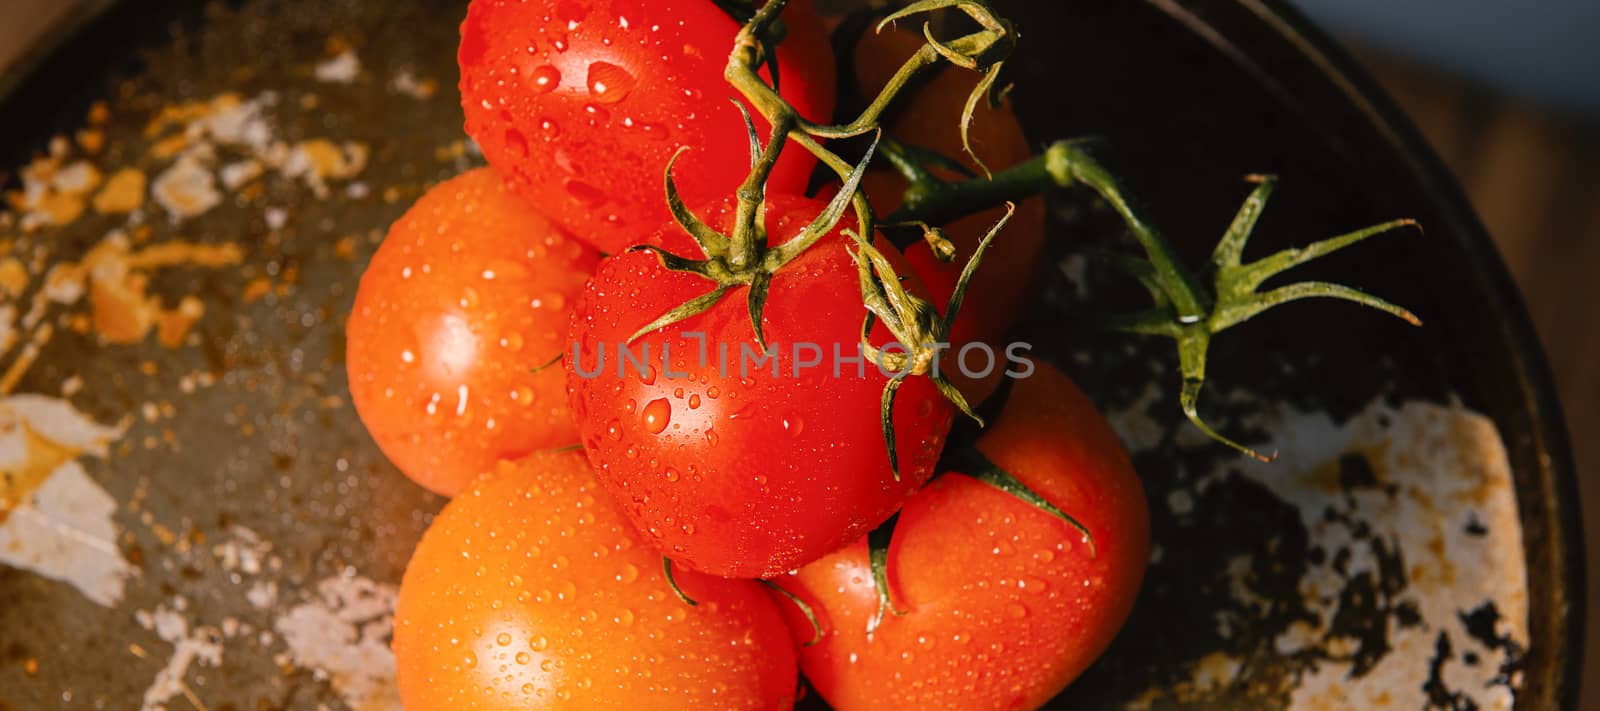 Red ripe fresh tomatoes by artistrobd